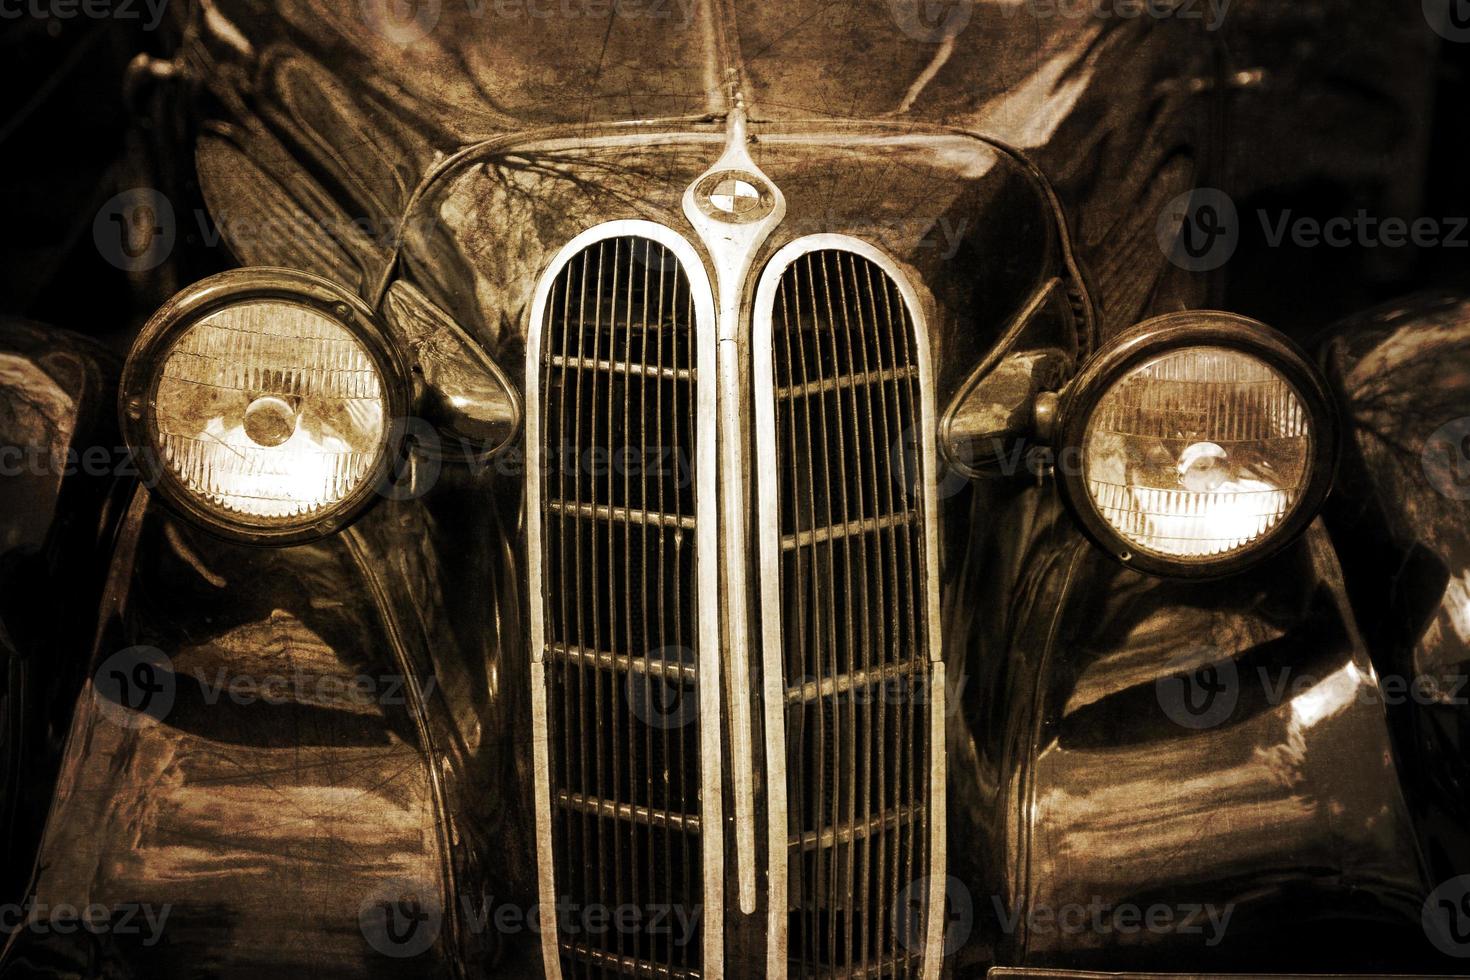 gammal årgång metall detaljer bil i de museum närbild foto